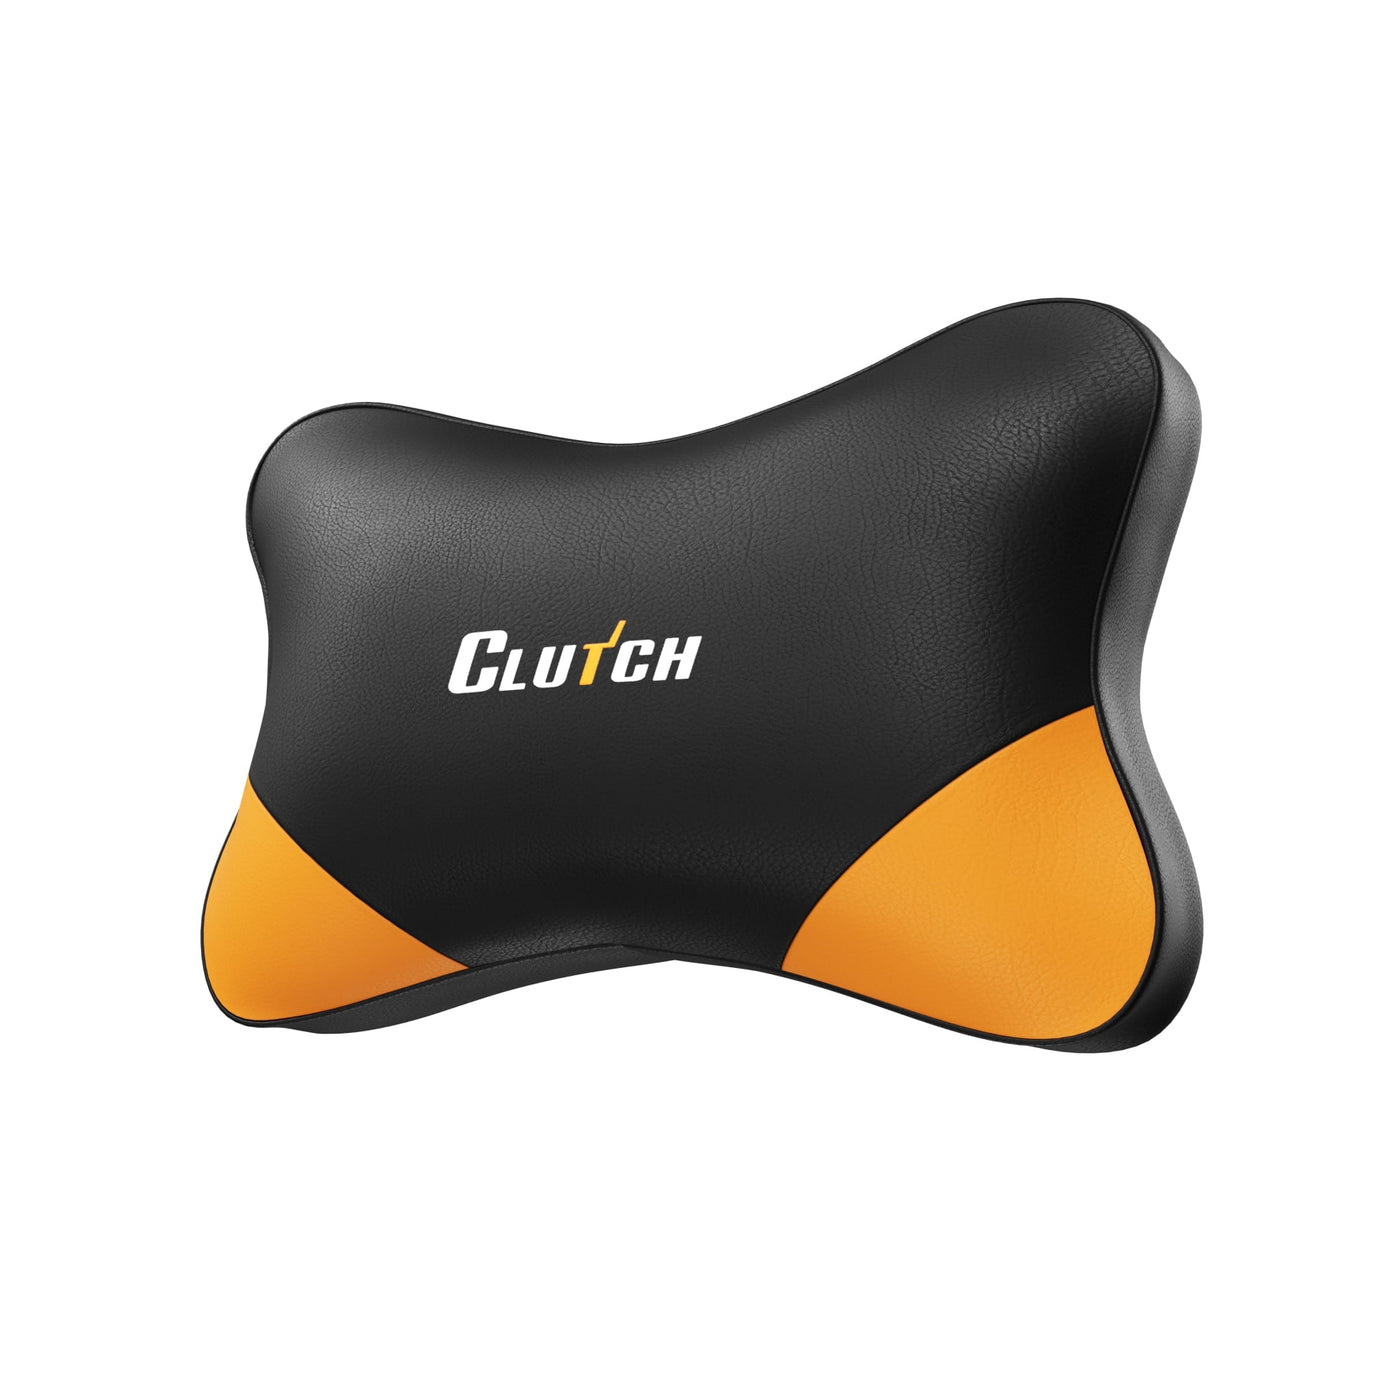 Clutch - Head Rest Pillow Part Clutch Chairz Head rest Orange 